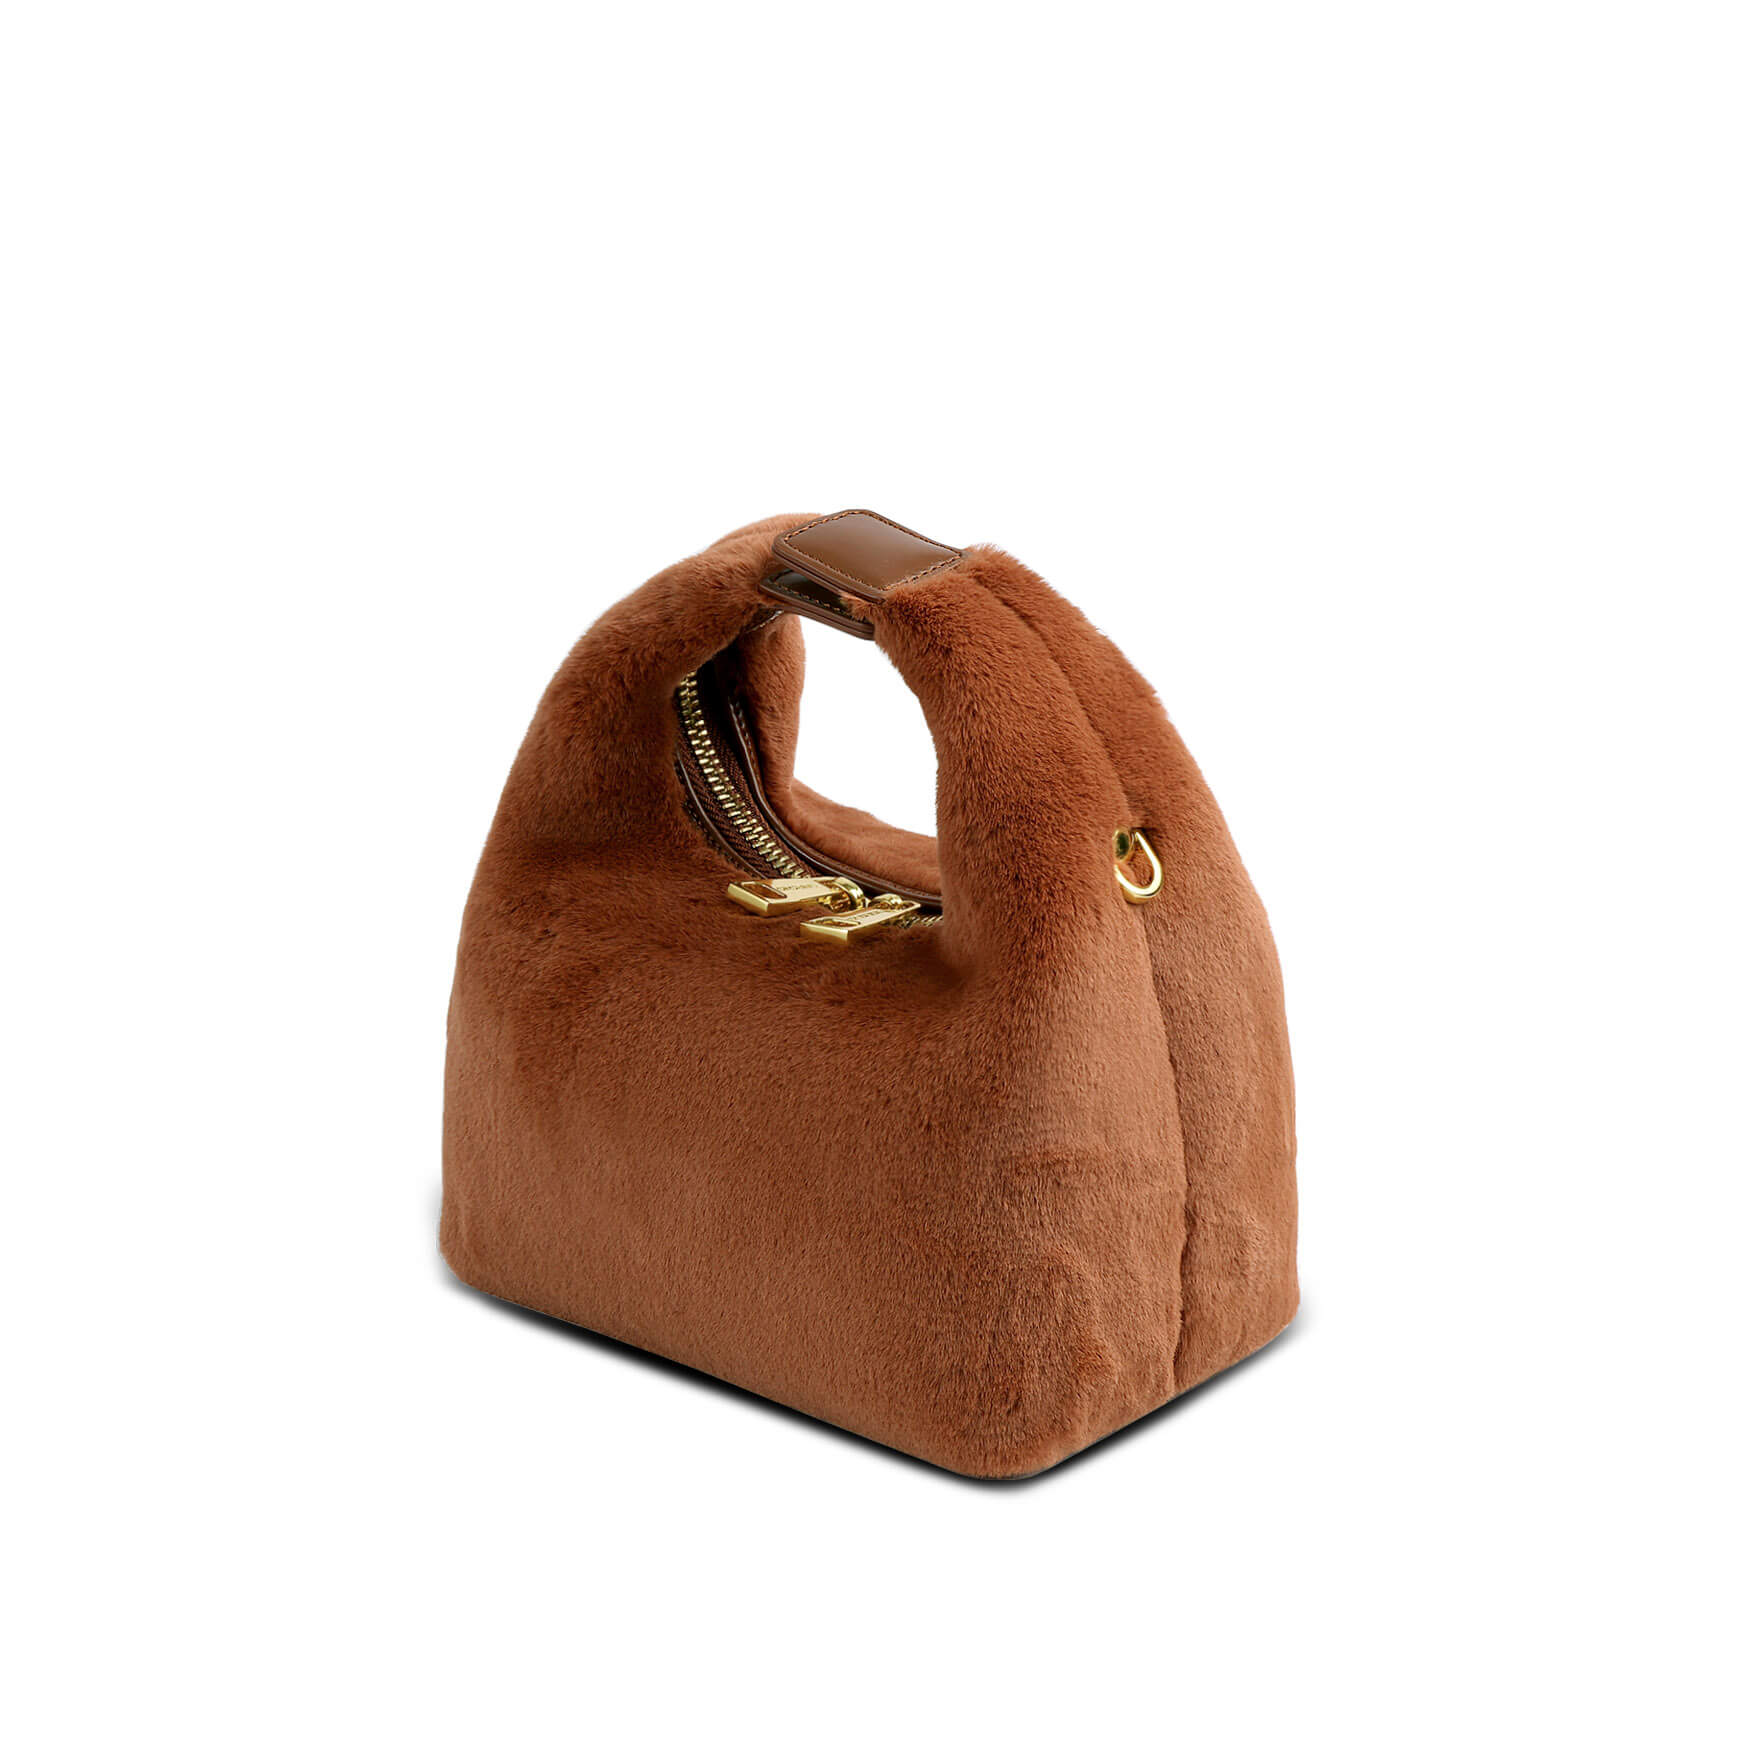 SINBONO Vienna Toffee Leather Handbags -Vegan Leather Women Bag